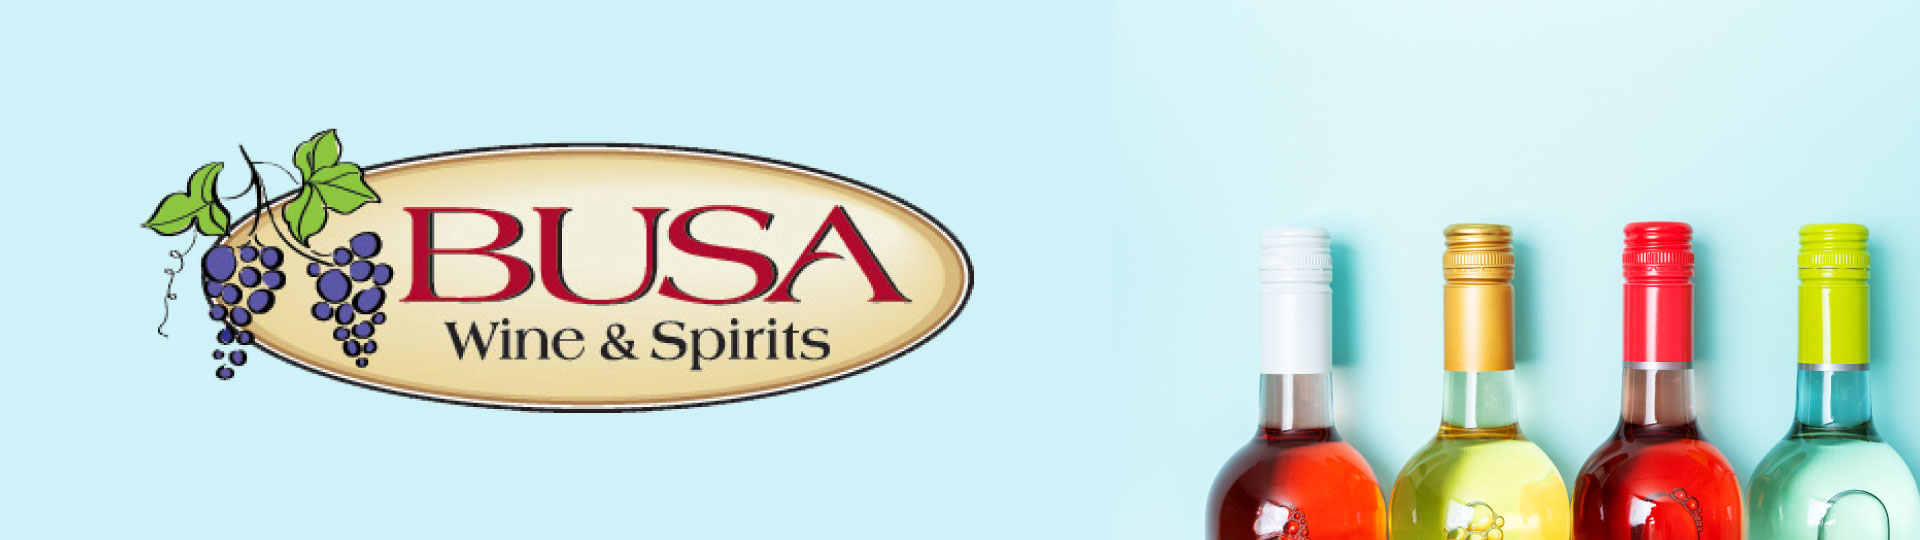 Busa Wine & Spirits